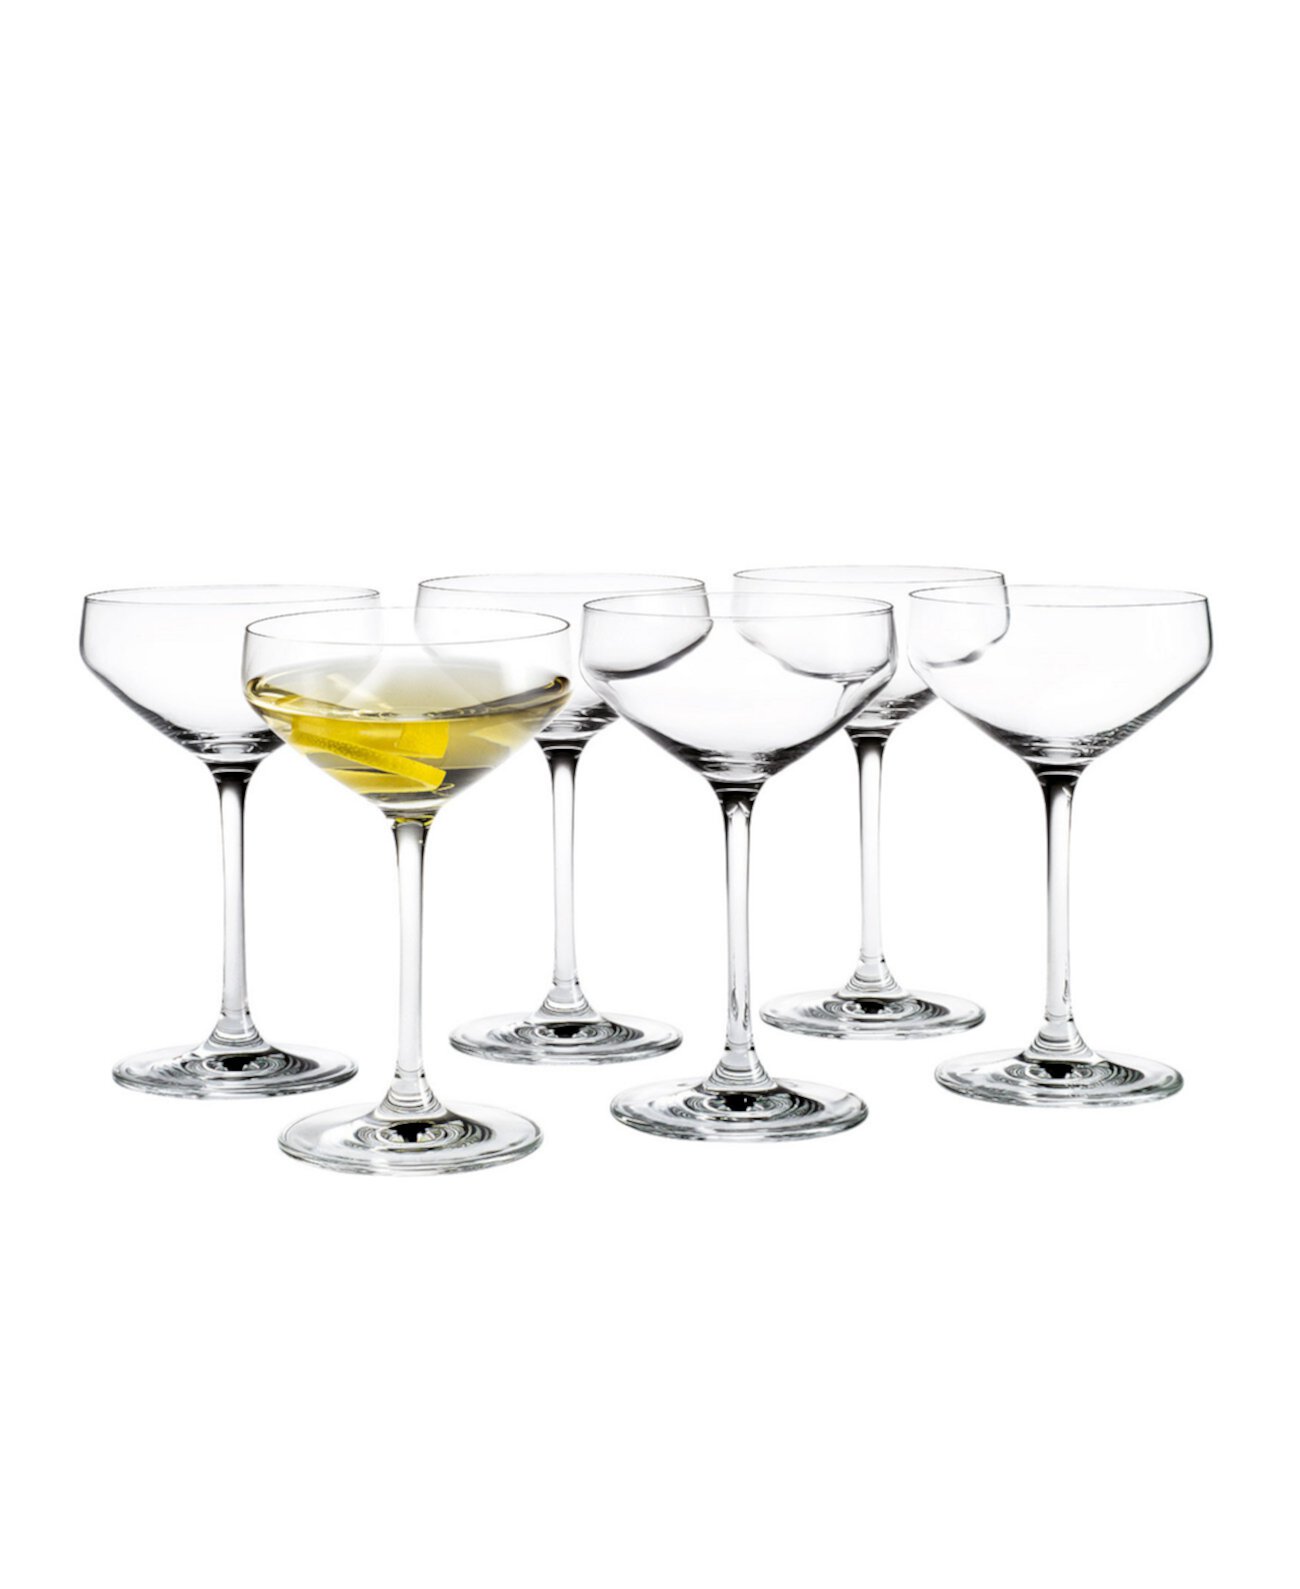 Бокалы для мартини Perfection, 9,9 унций, набор из 6 шт. Holmegaard